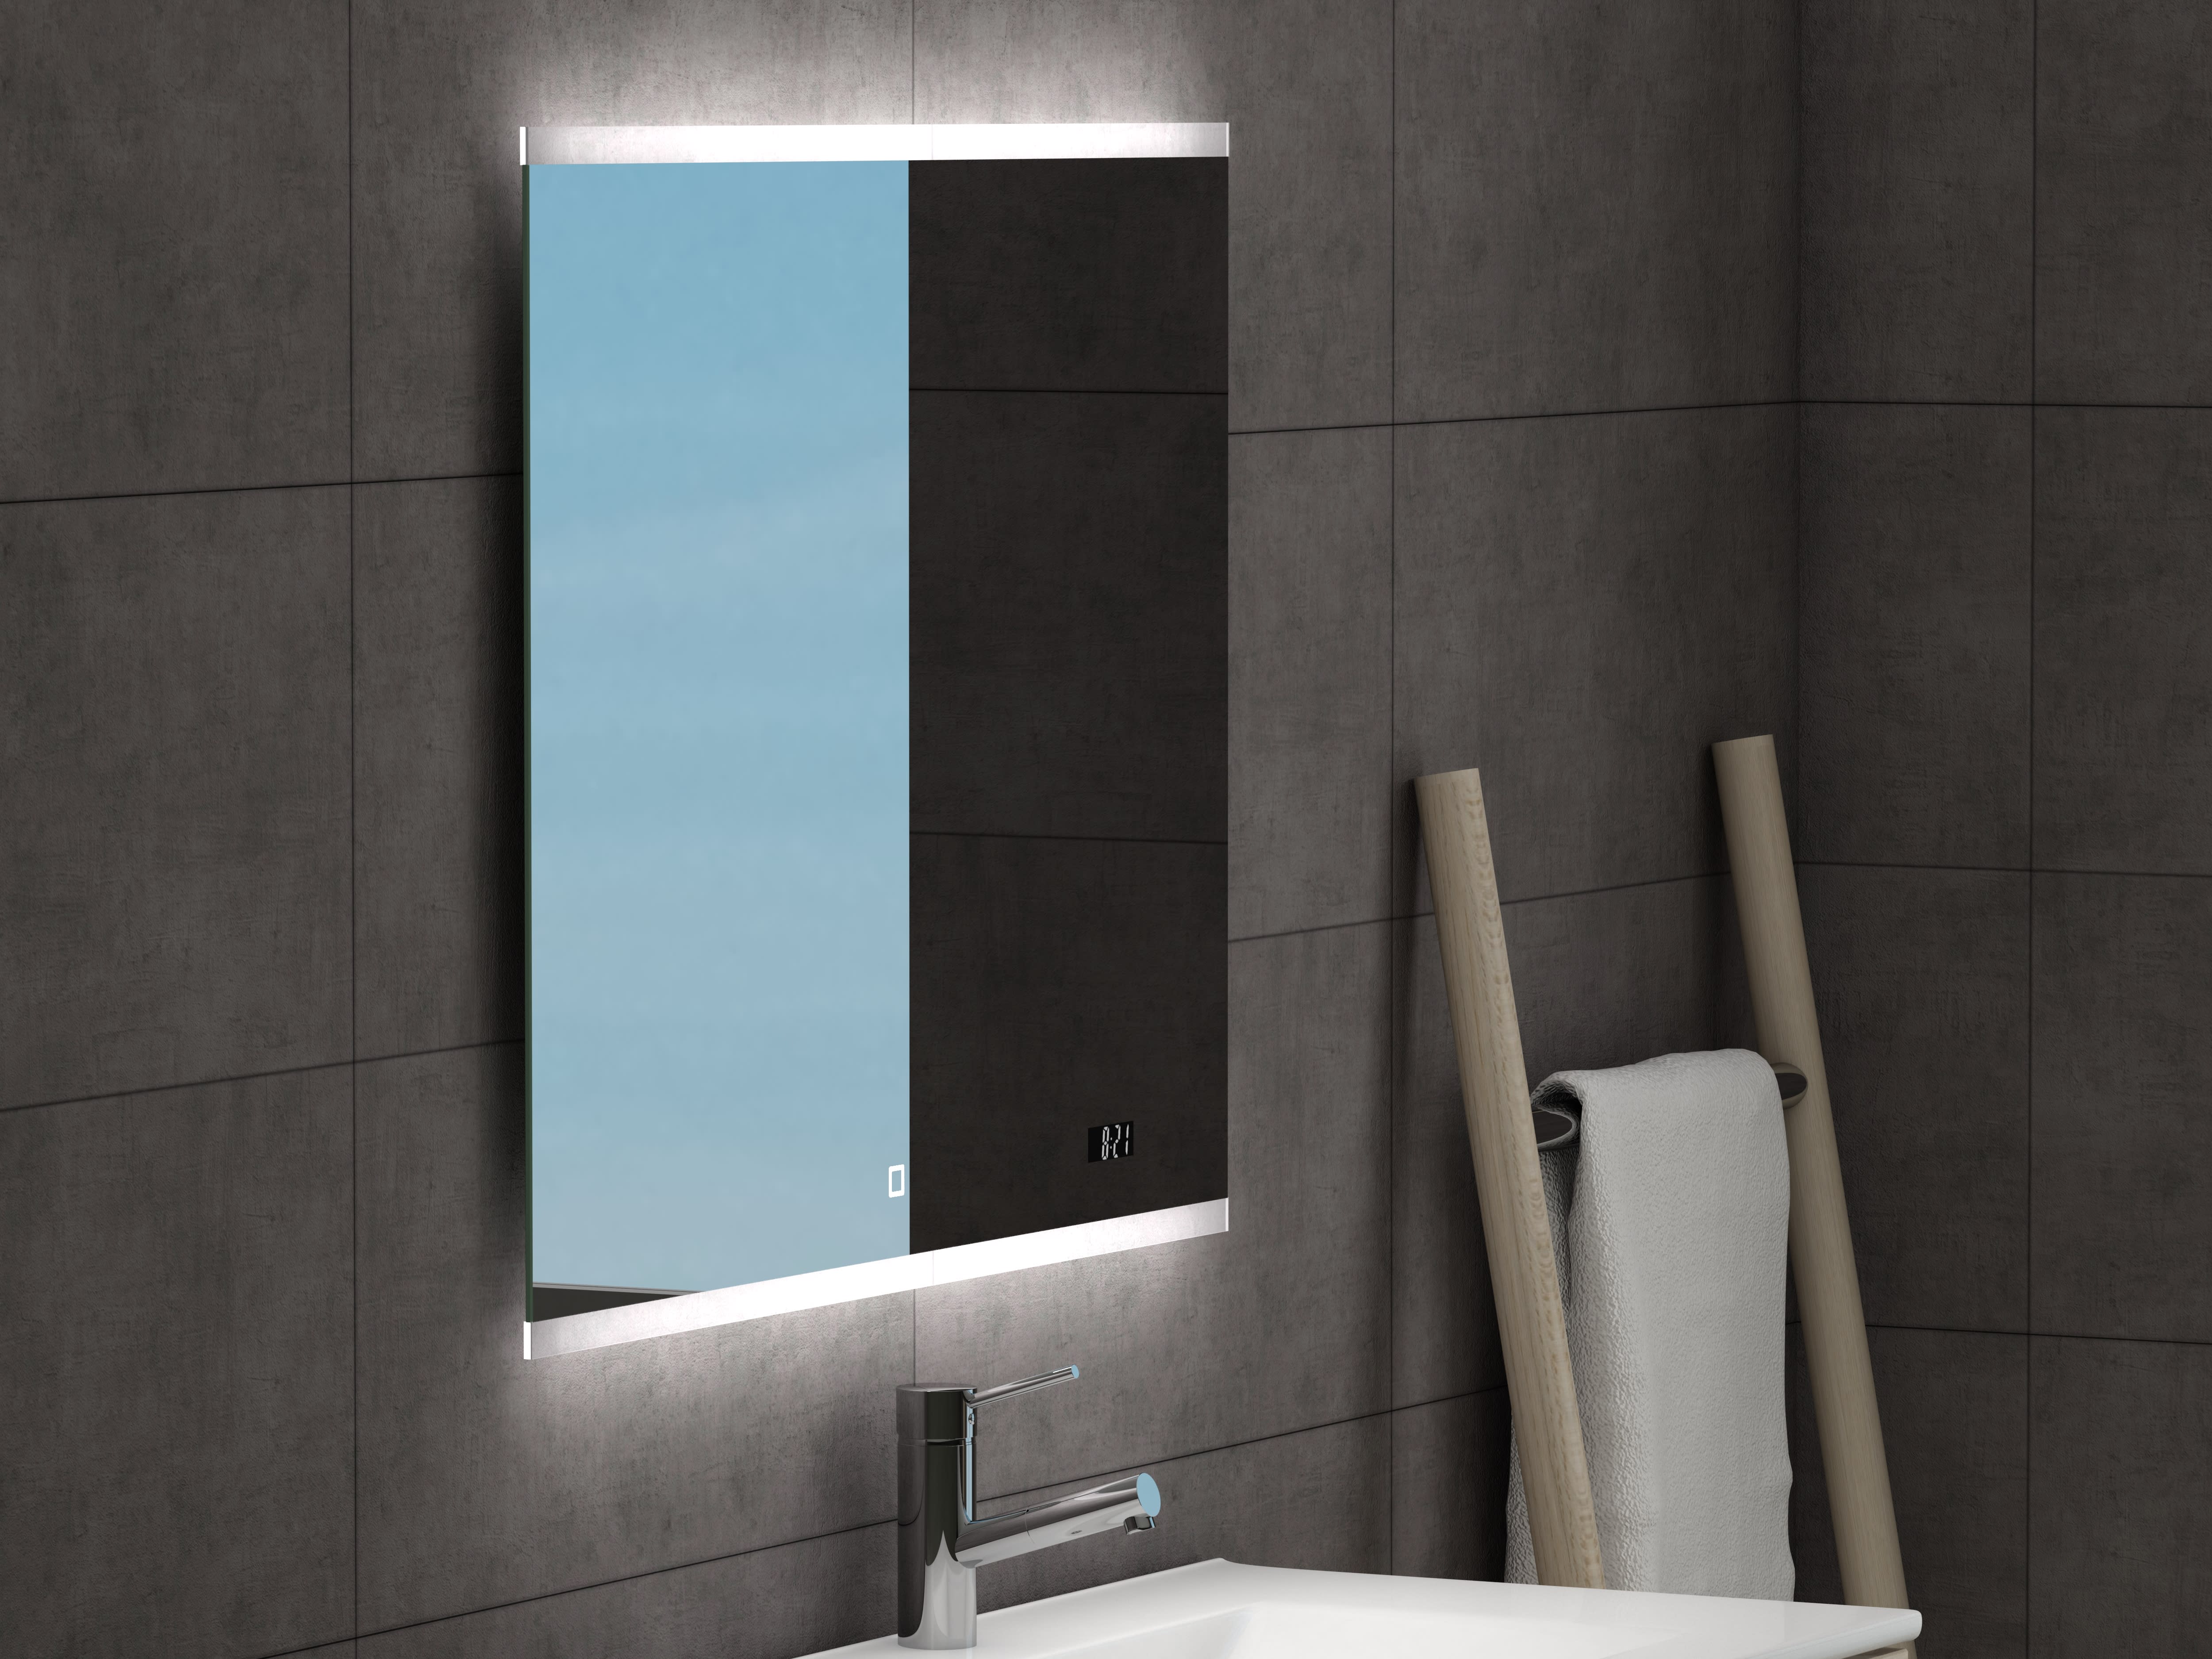 Espejo rectangular baño - Moon de Coycama, ¡envíos gratis!